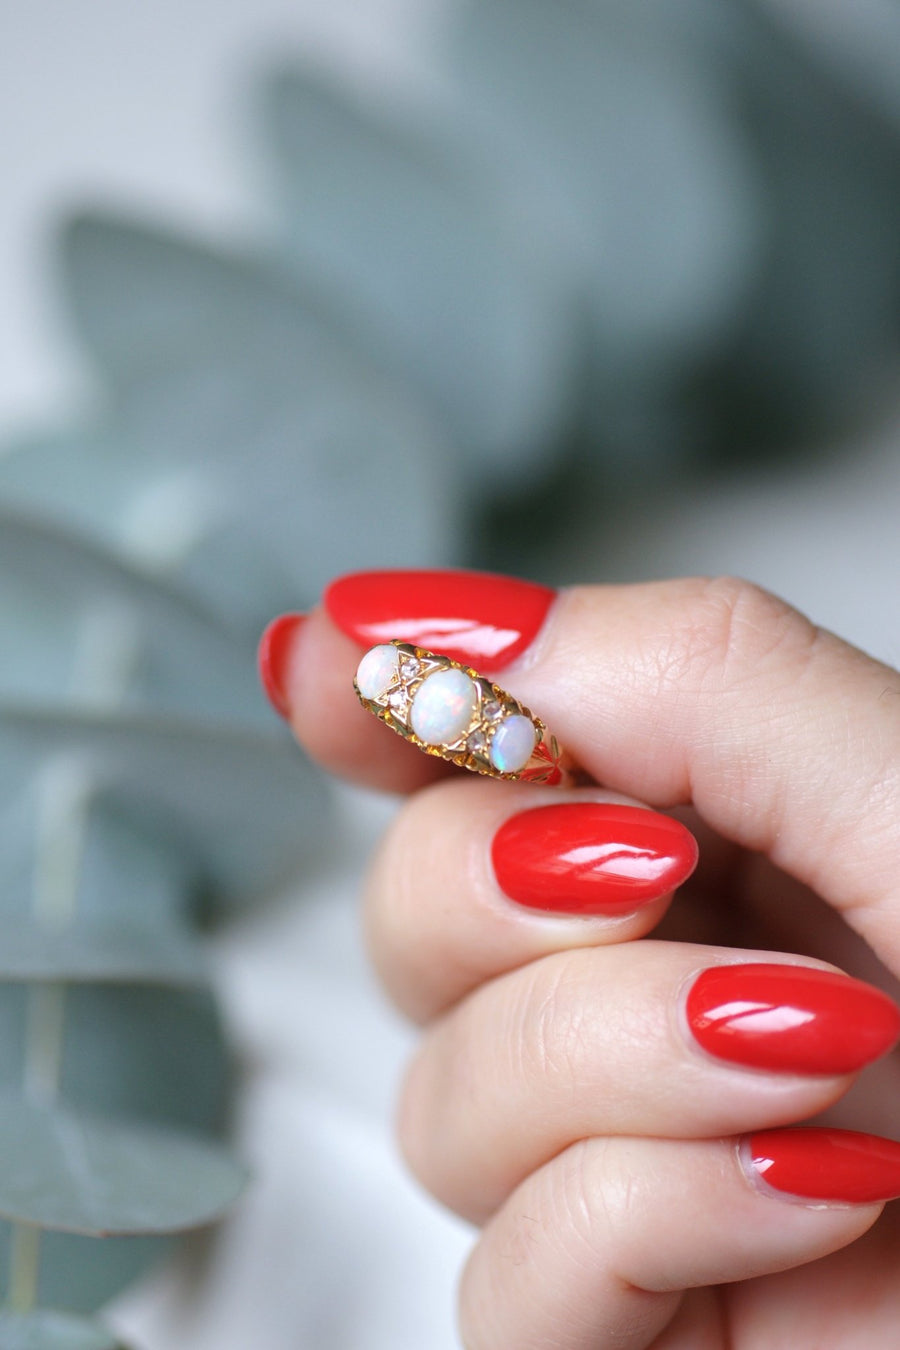 Antique gold, opals and diamonds garter ring - Galerie Pénélope